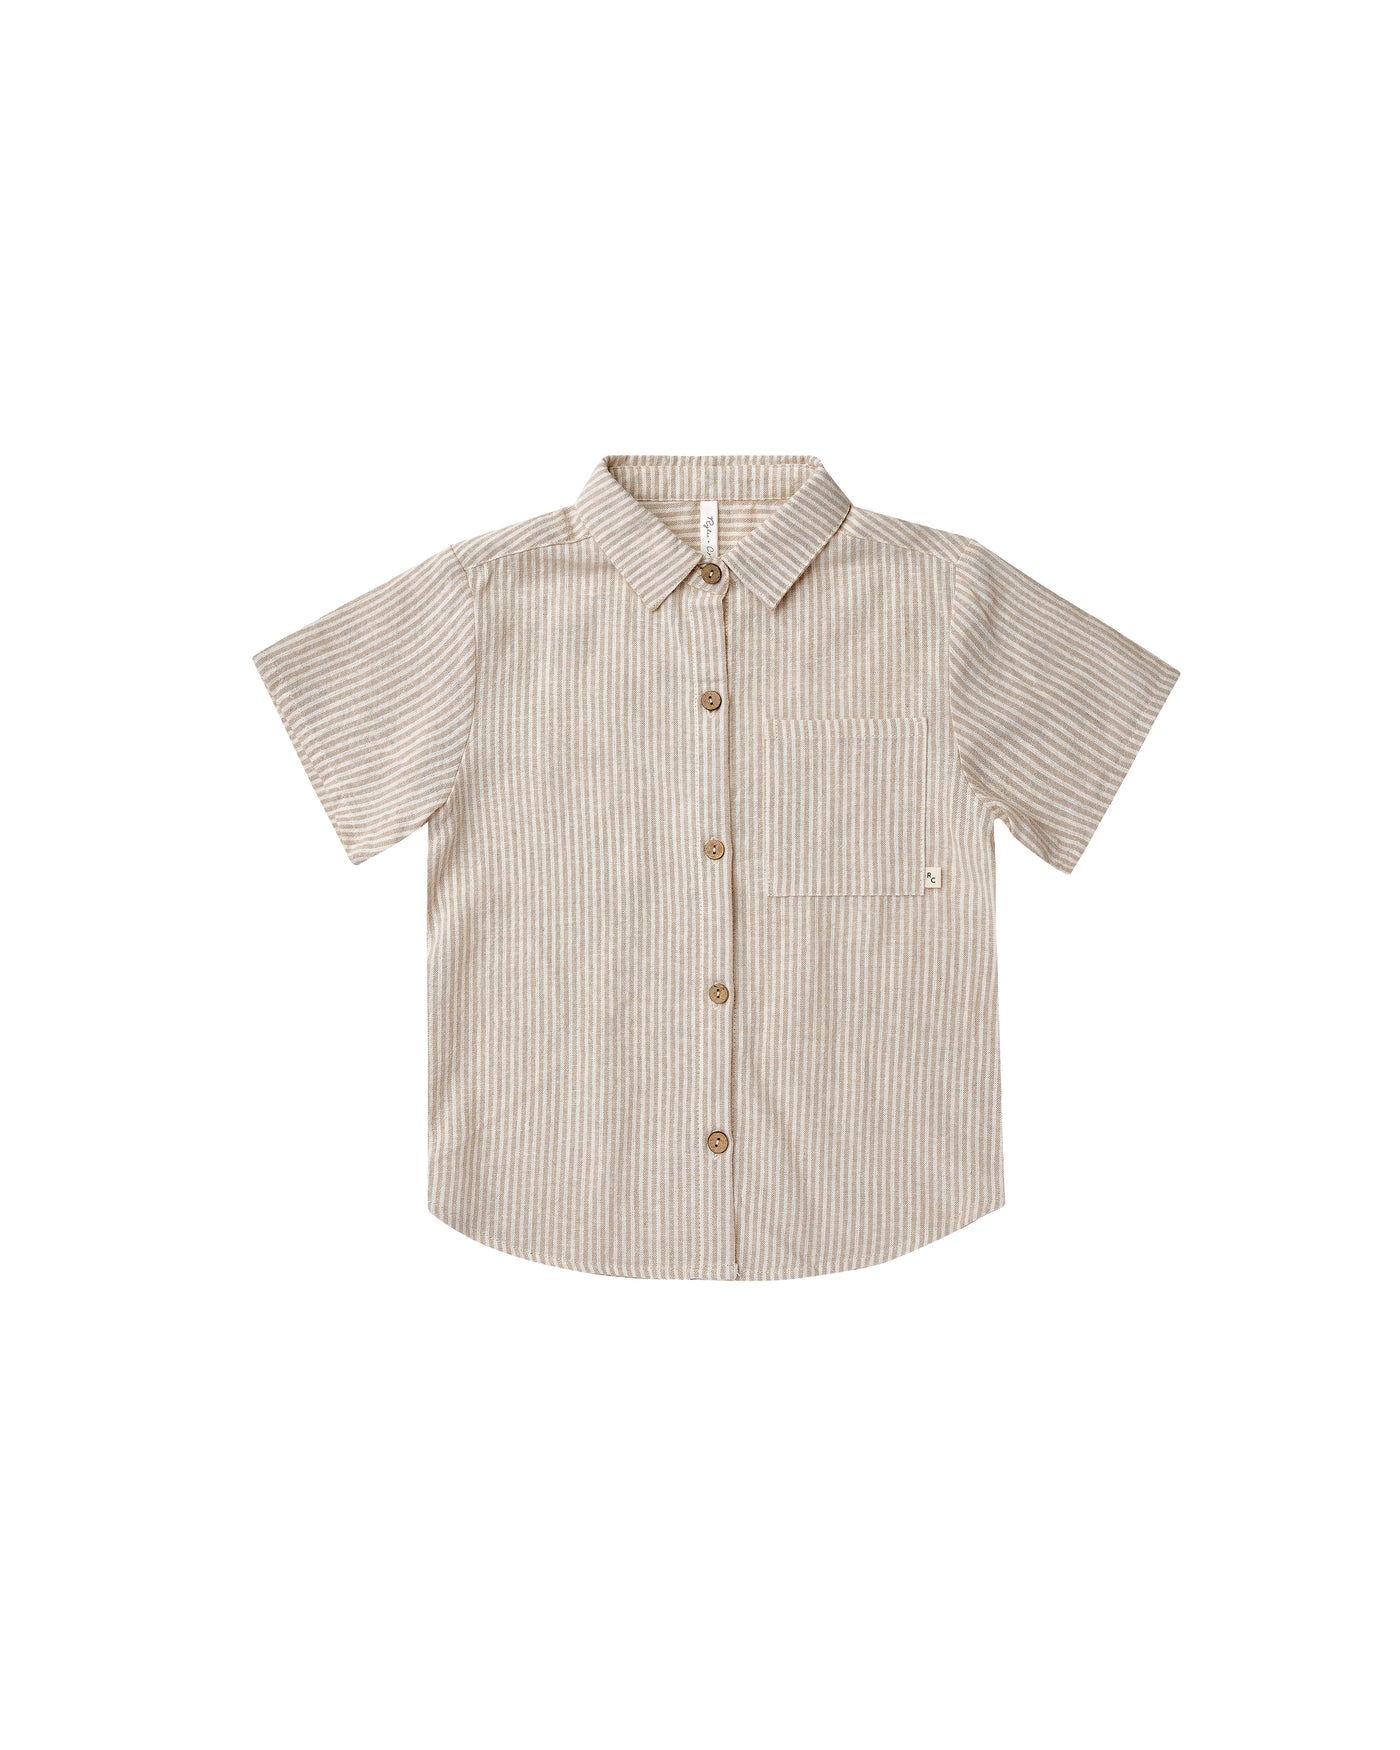 Collared Short Sleeve Shirt || Sand Stripe